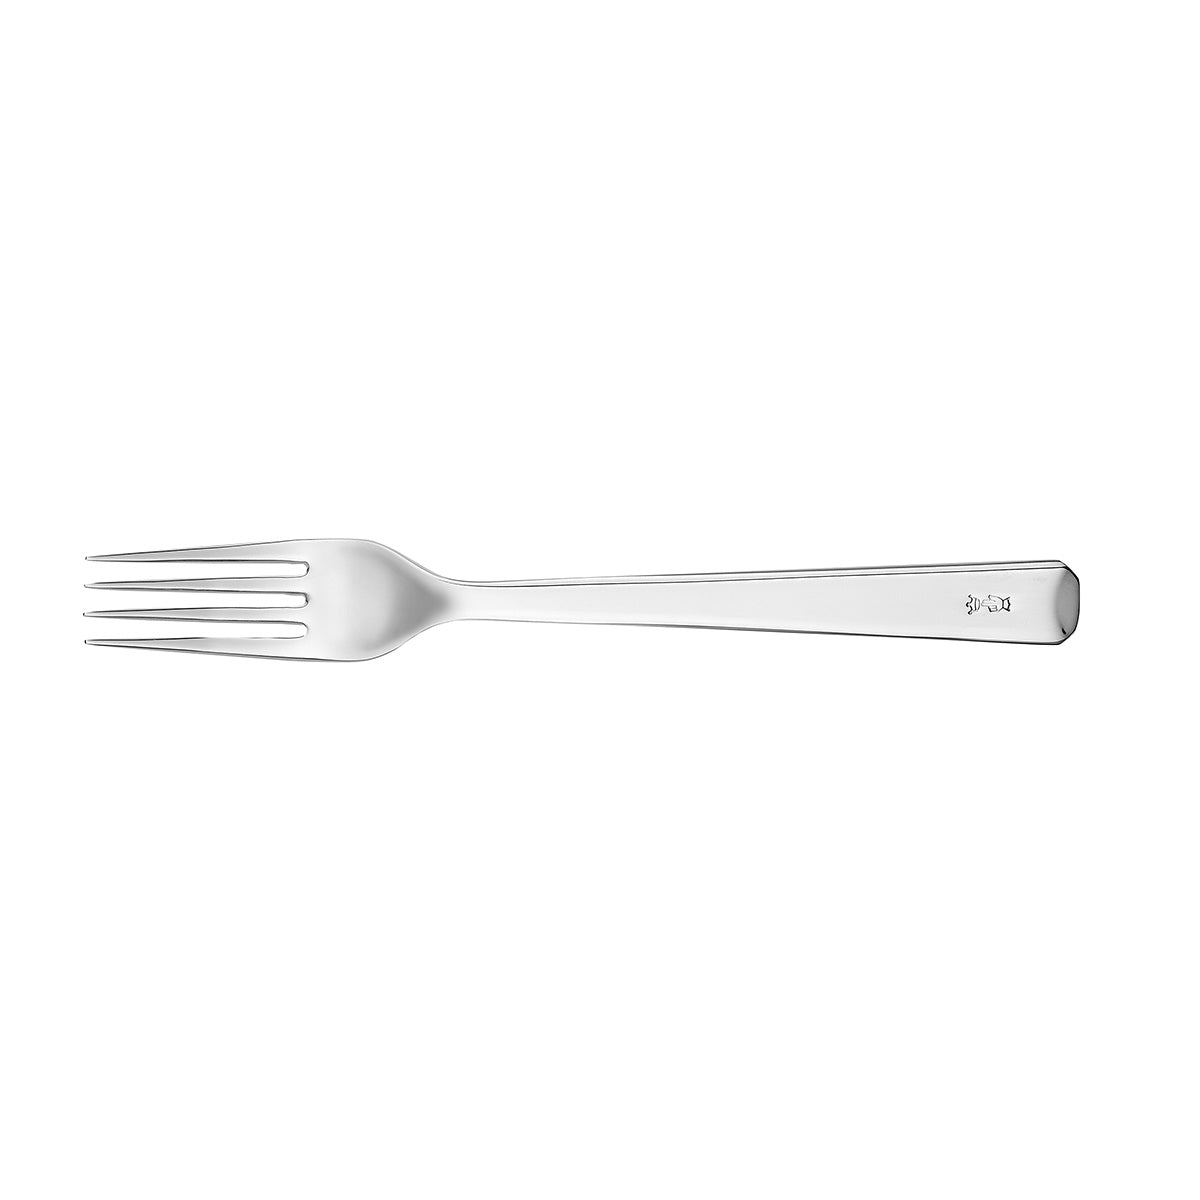 Perpétue "Entremets" Set of 12-Piece Demi-tasse Forks